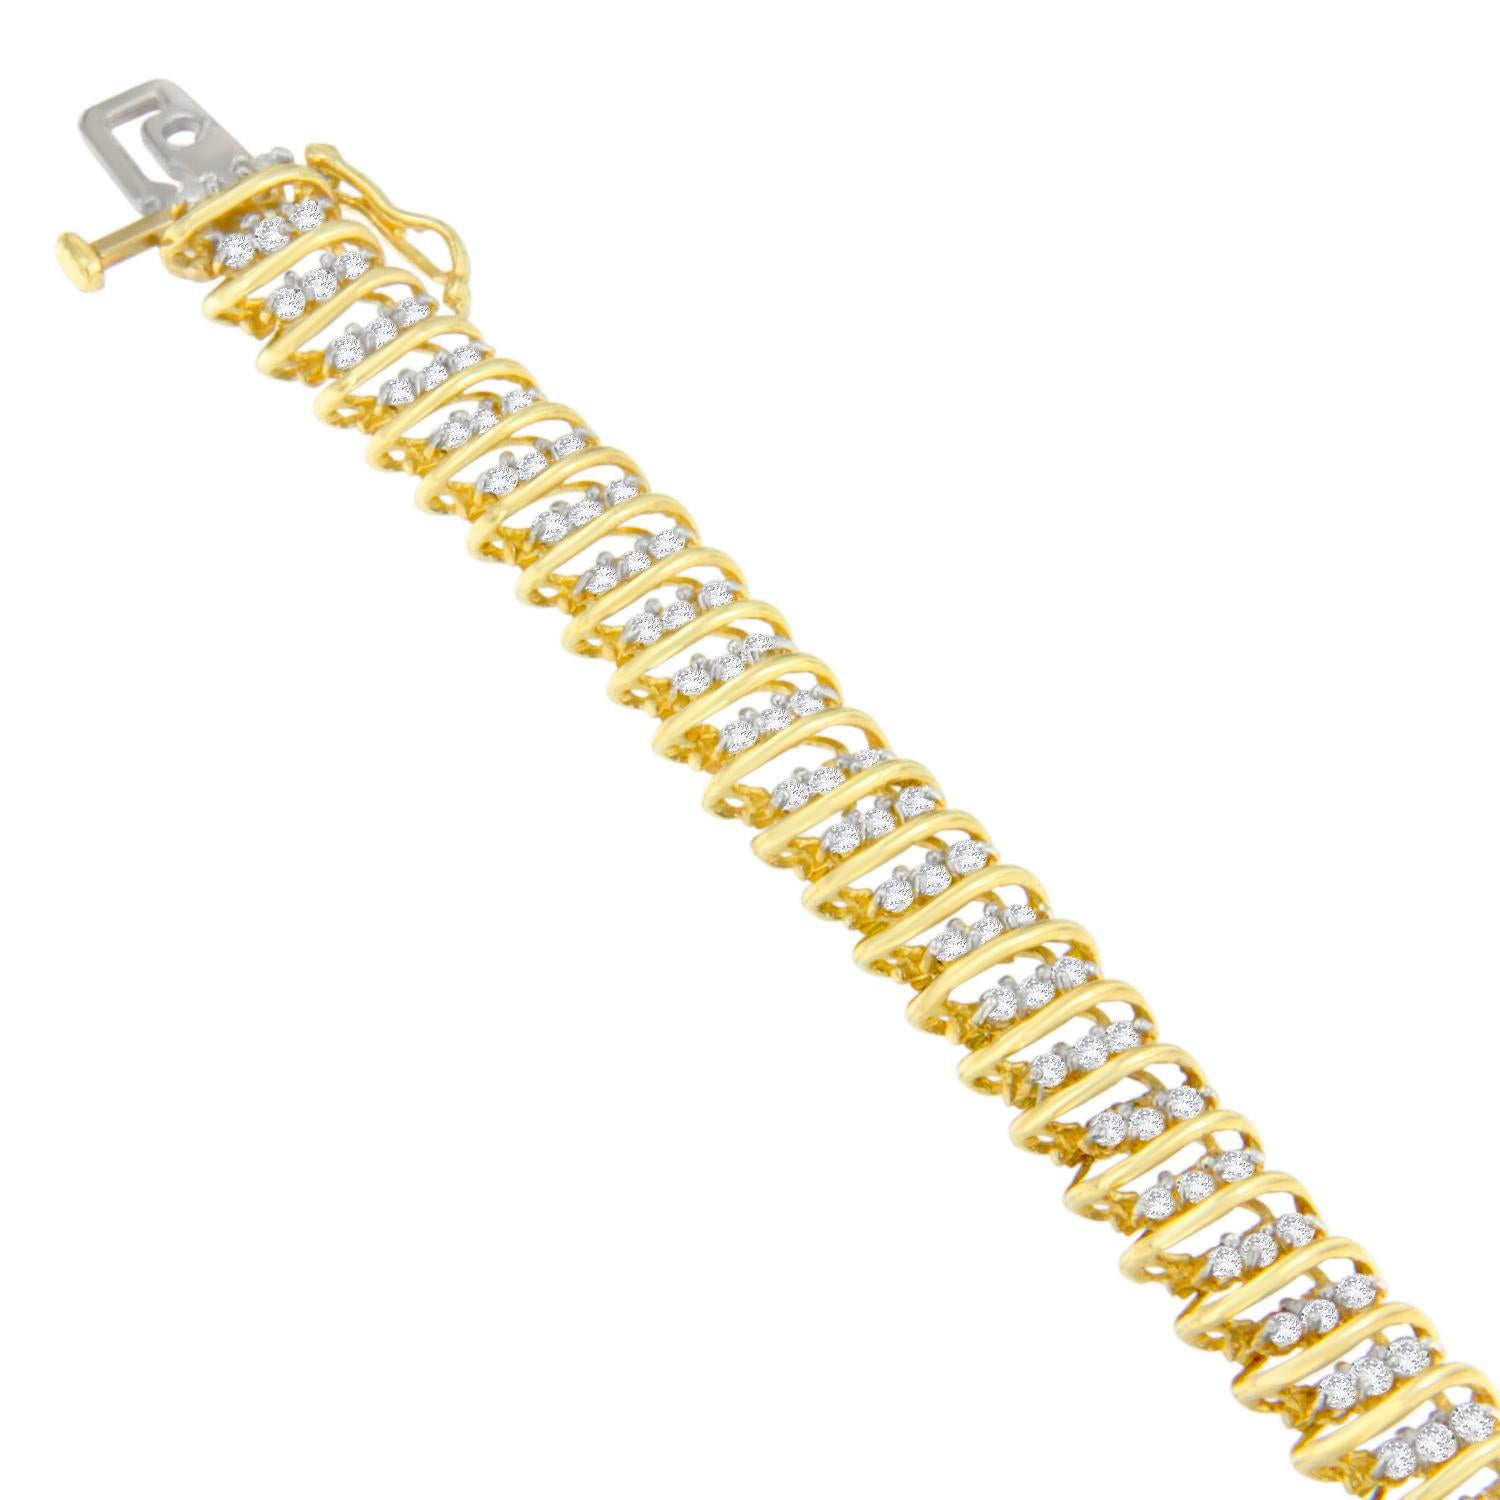 Round Cut 10K Yellow Gold 2.00 Carat Diamond Wrap and S Link Bracelet